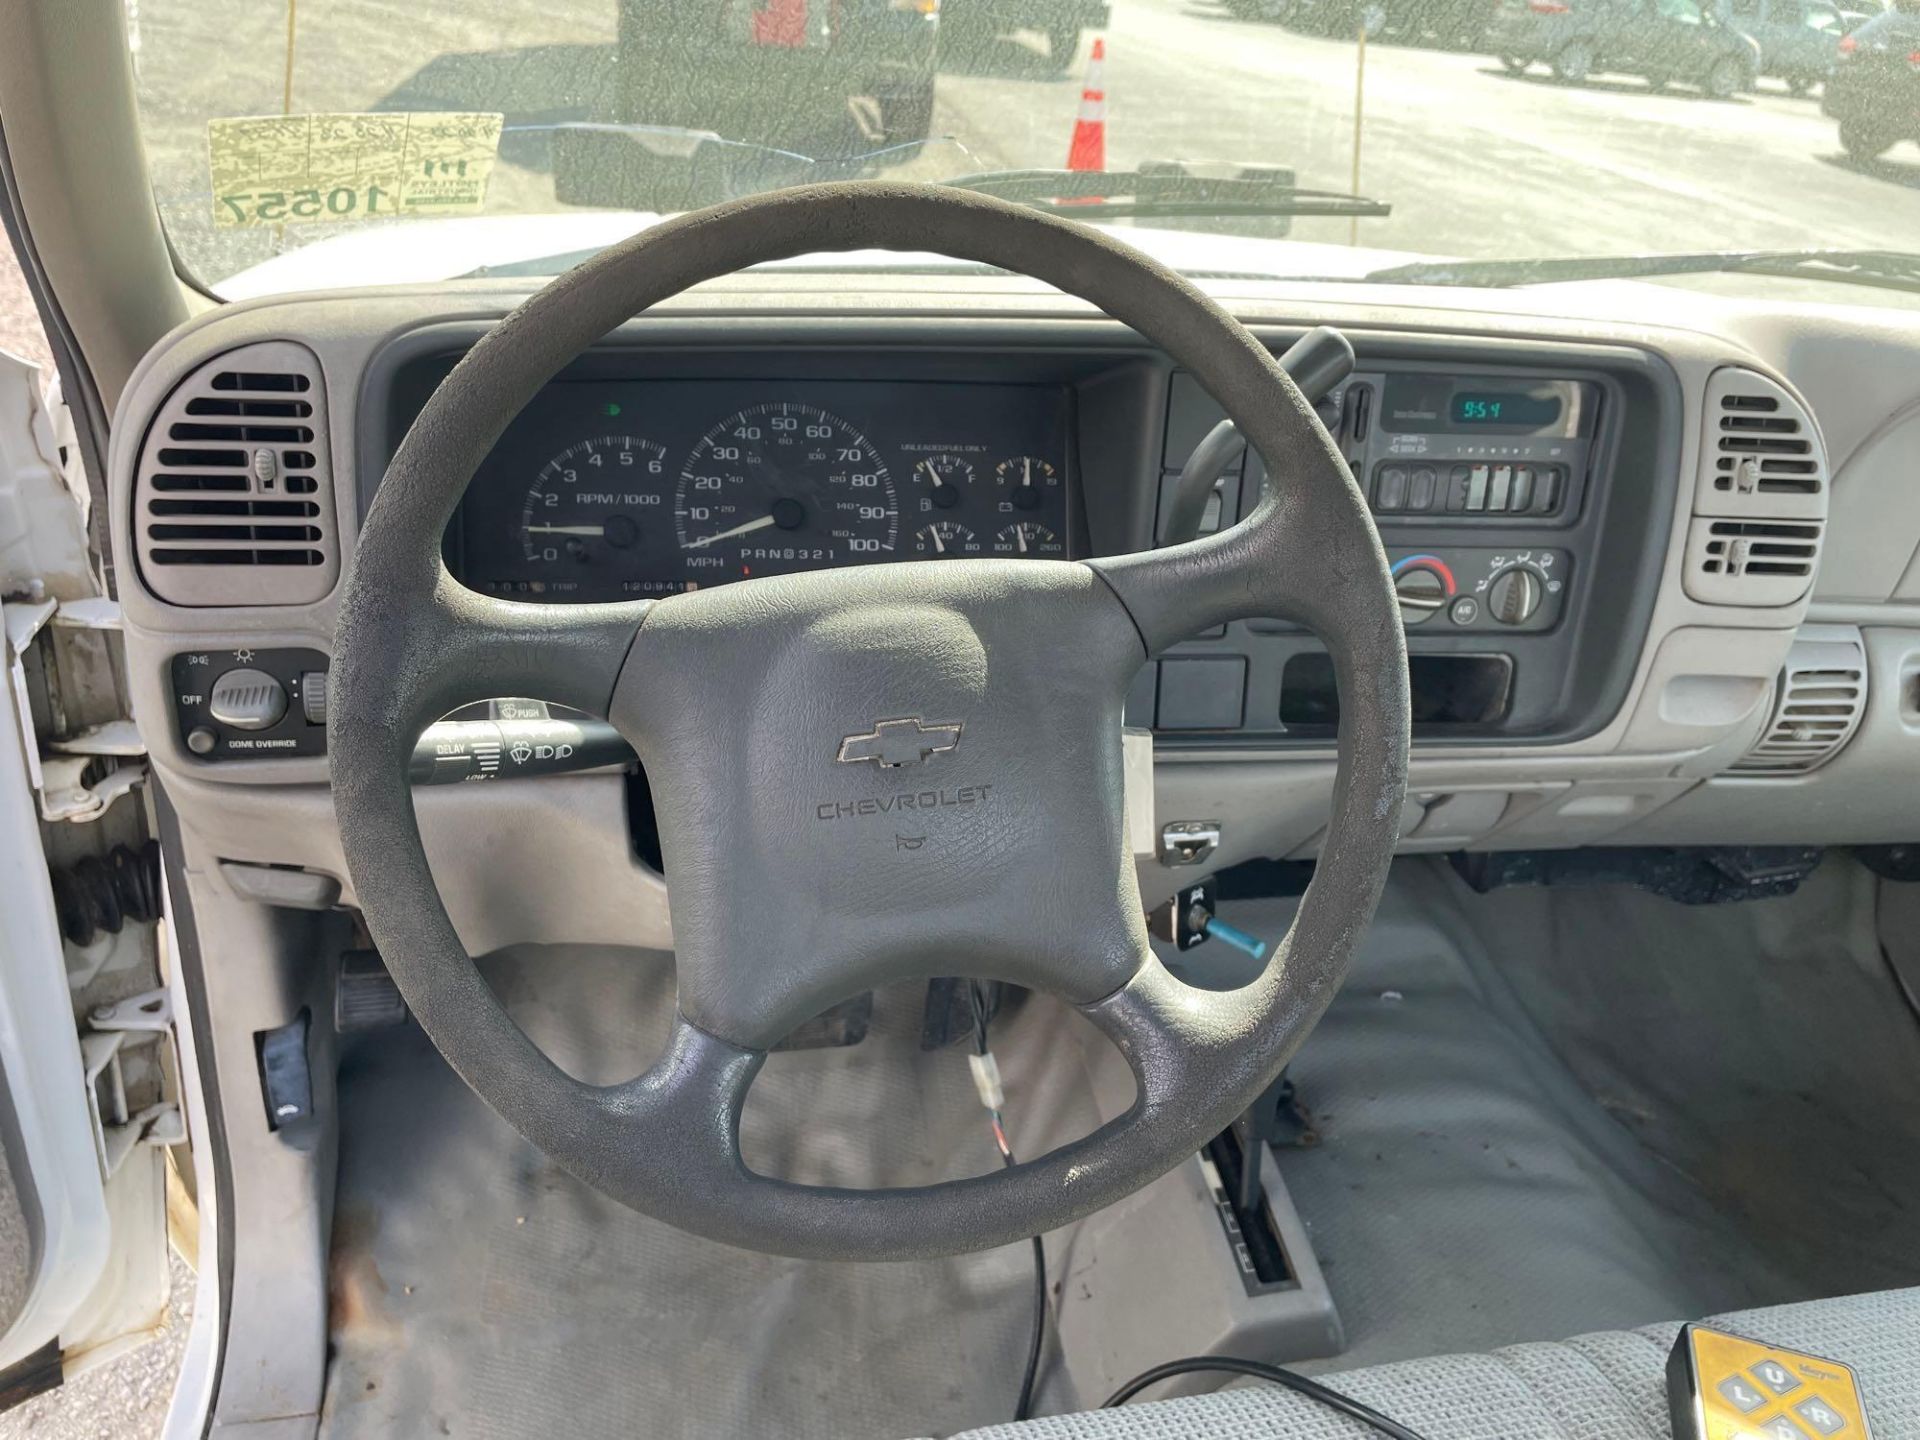 1997 Chevrolet 2500 Pickup Truck - Image 8 of 23